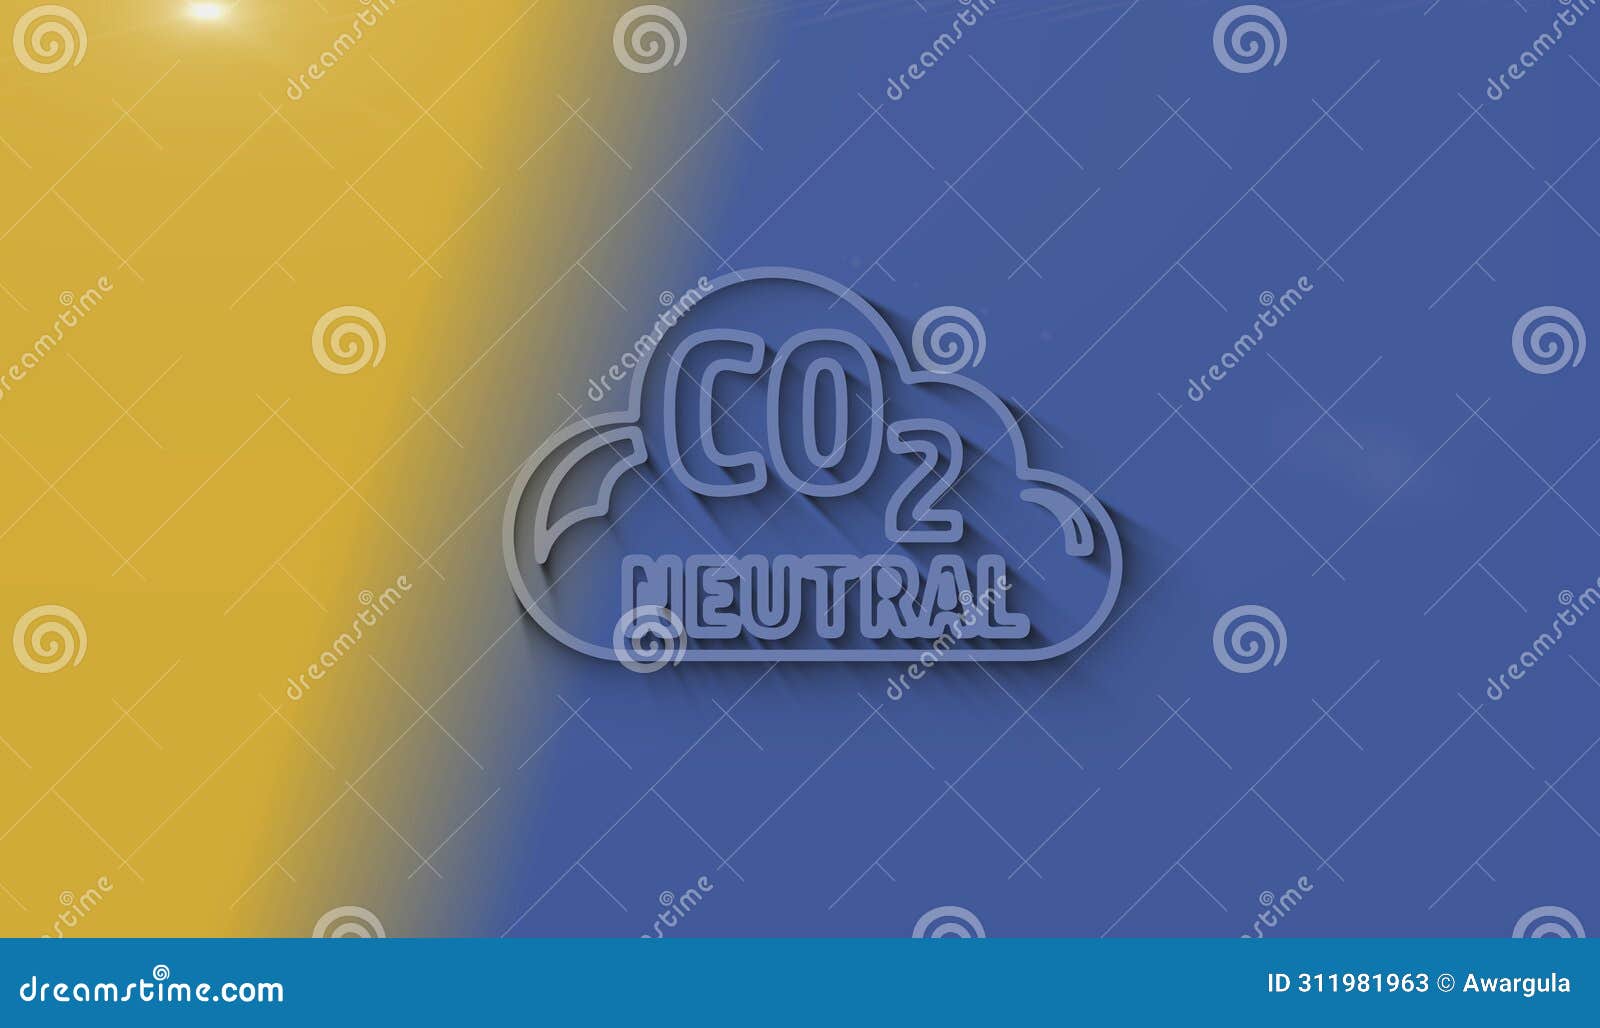 co2 neutral zero emission decarbonize  3d with shadow